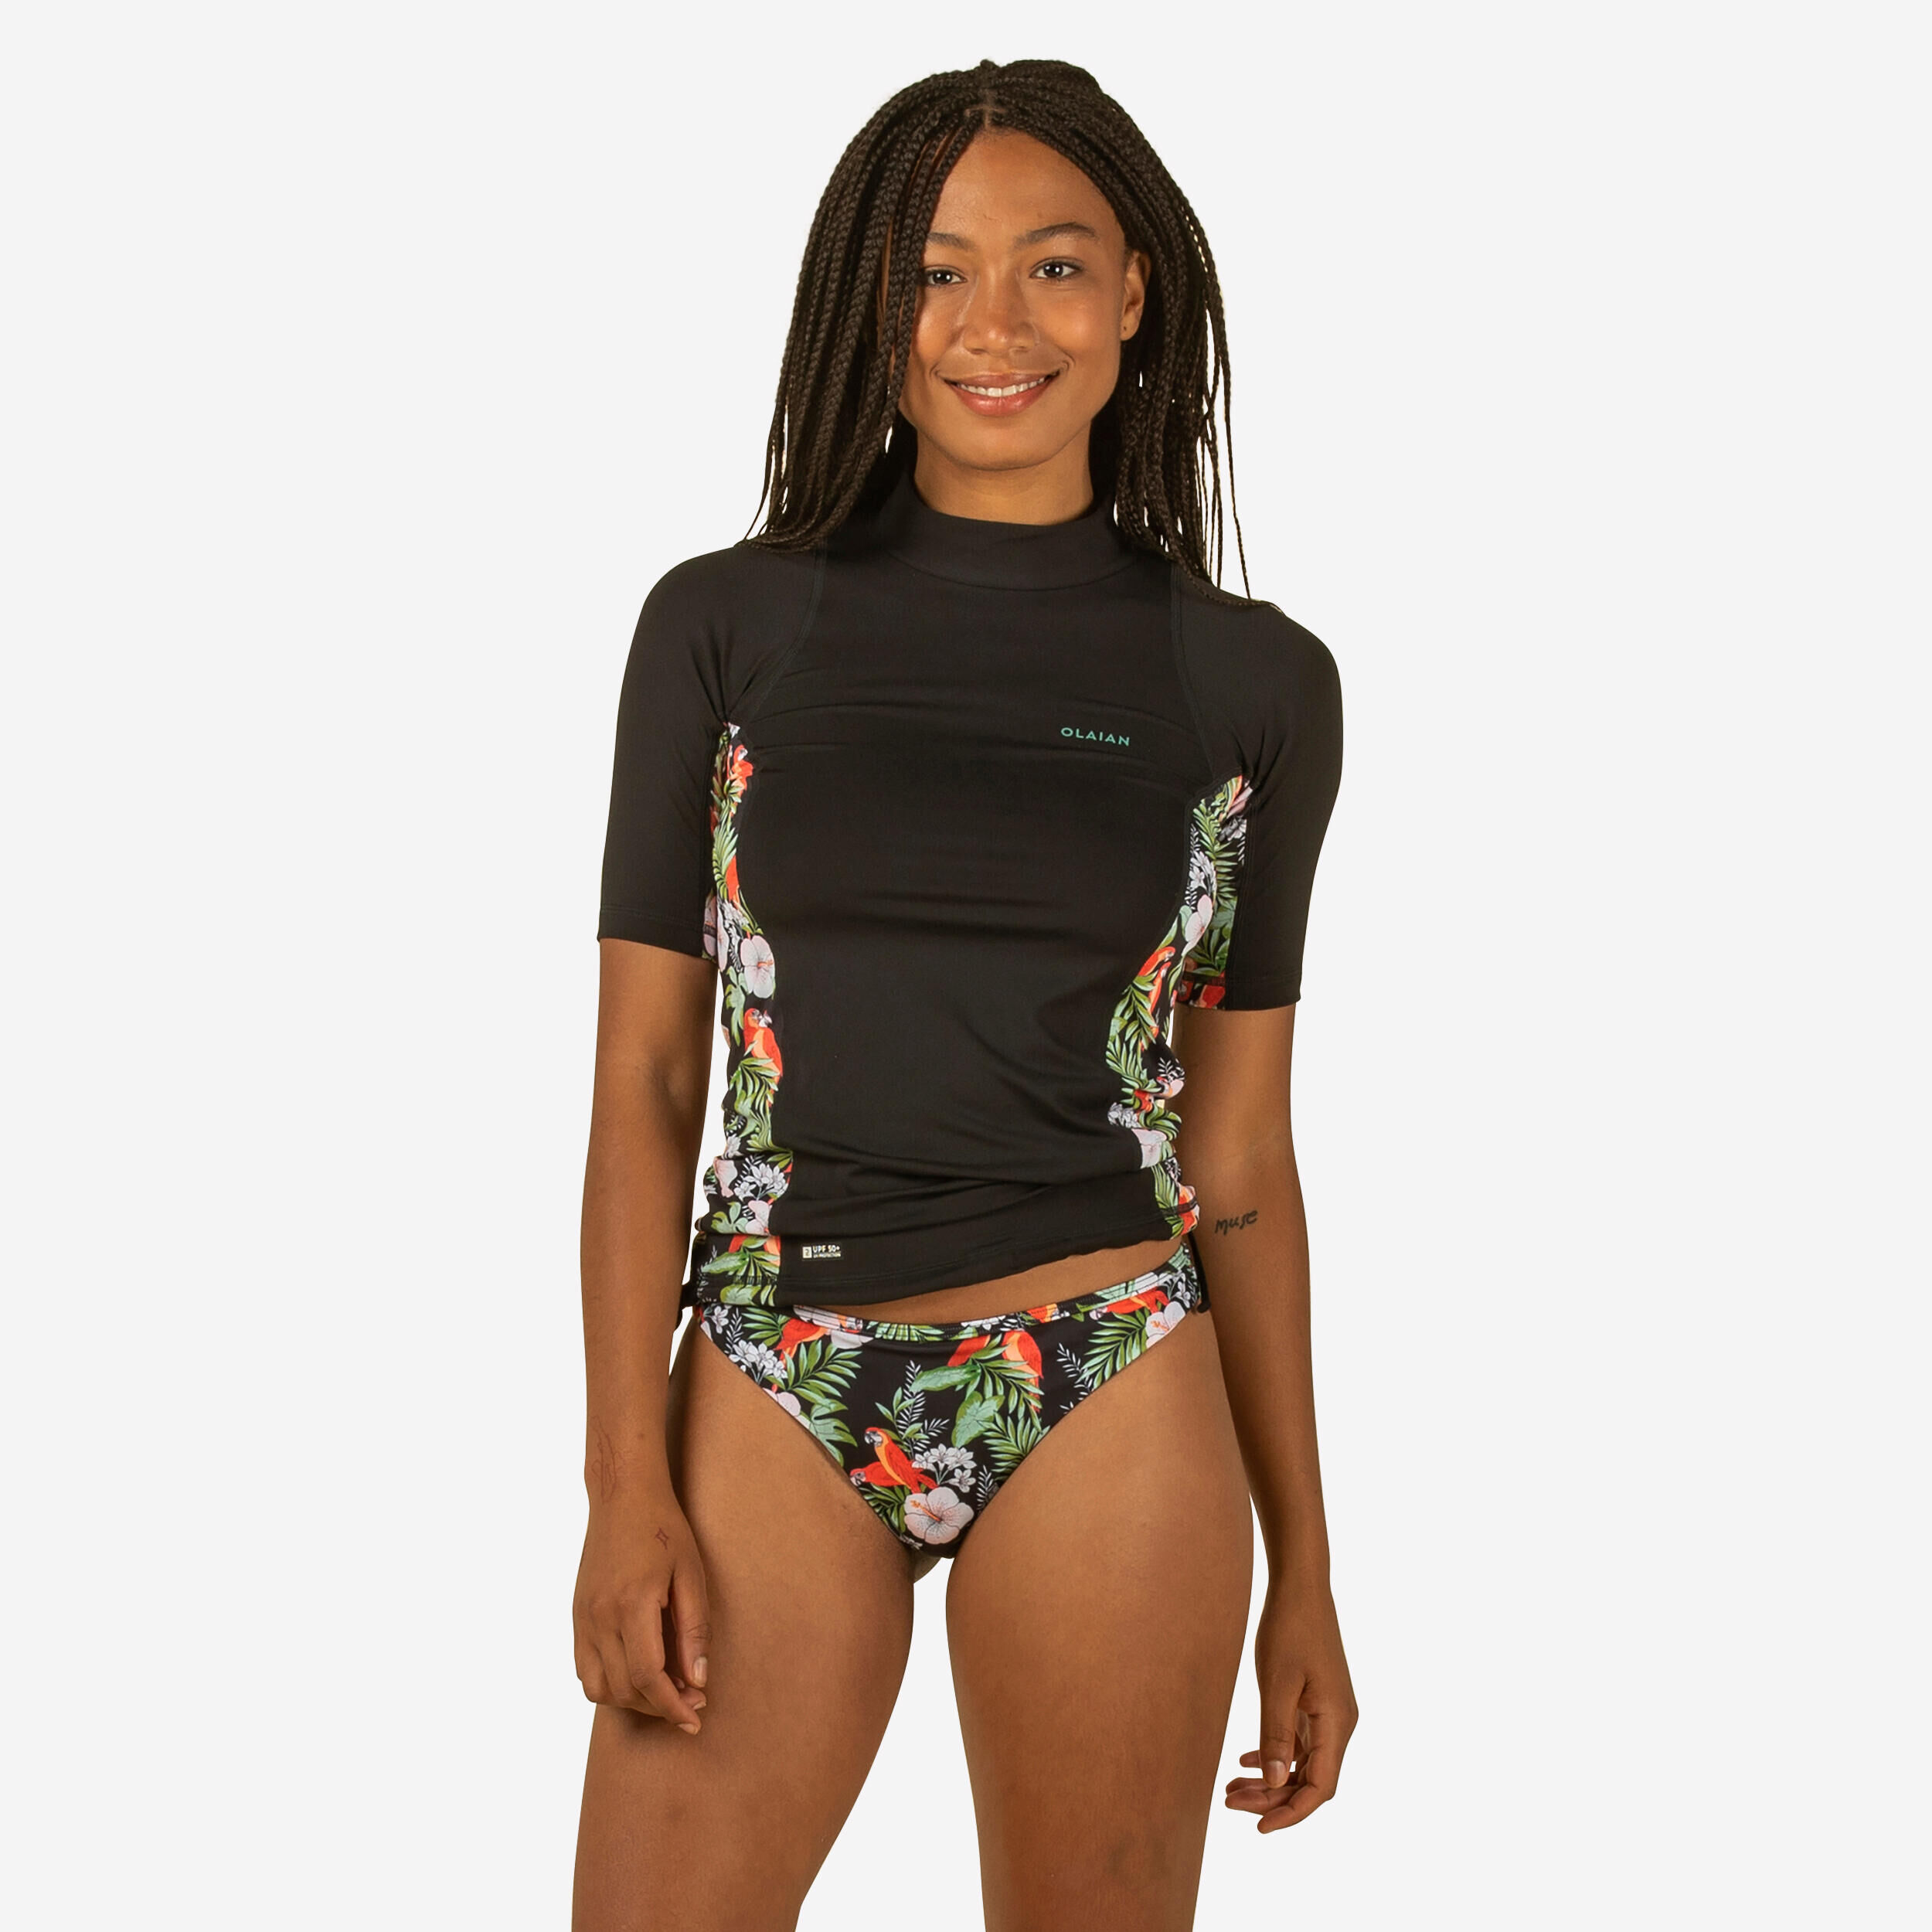 Women's Floral Print Black Surfing Wetsuit Anti-UV Swimsuit Rash